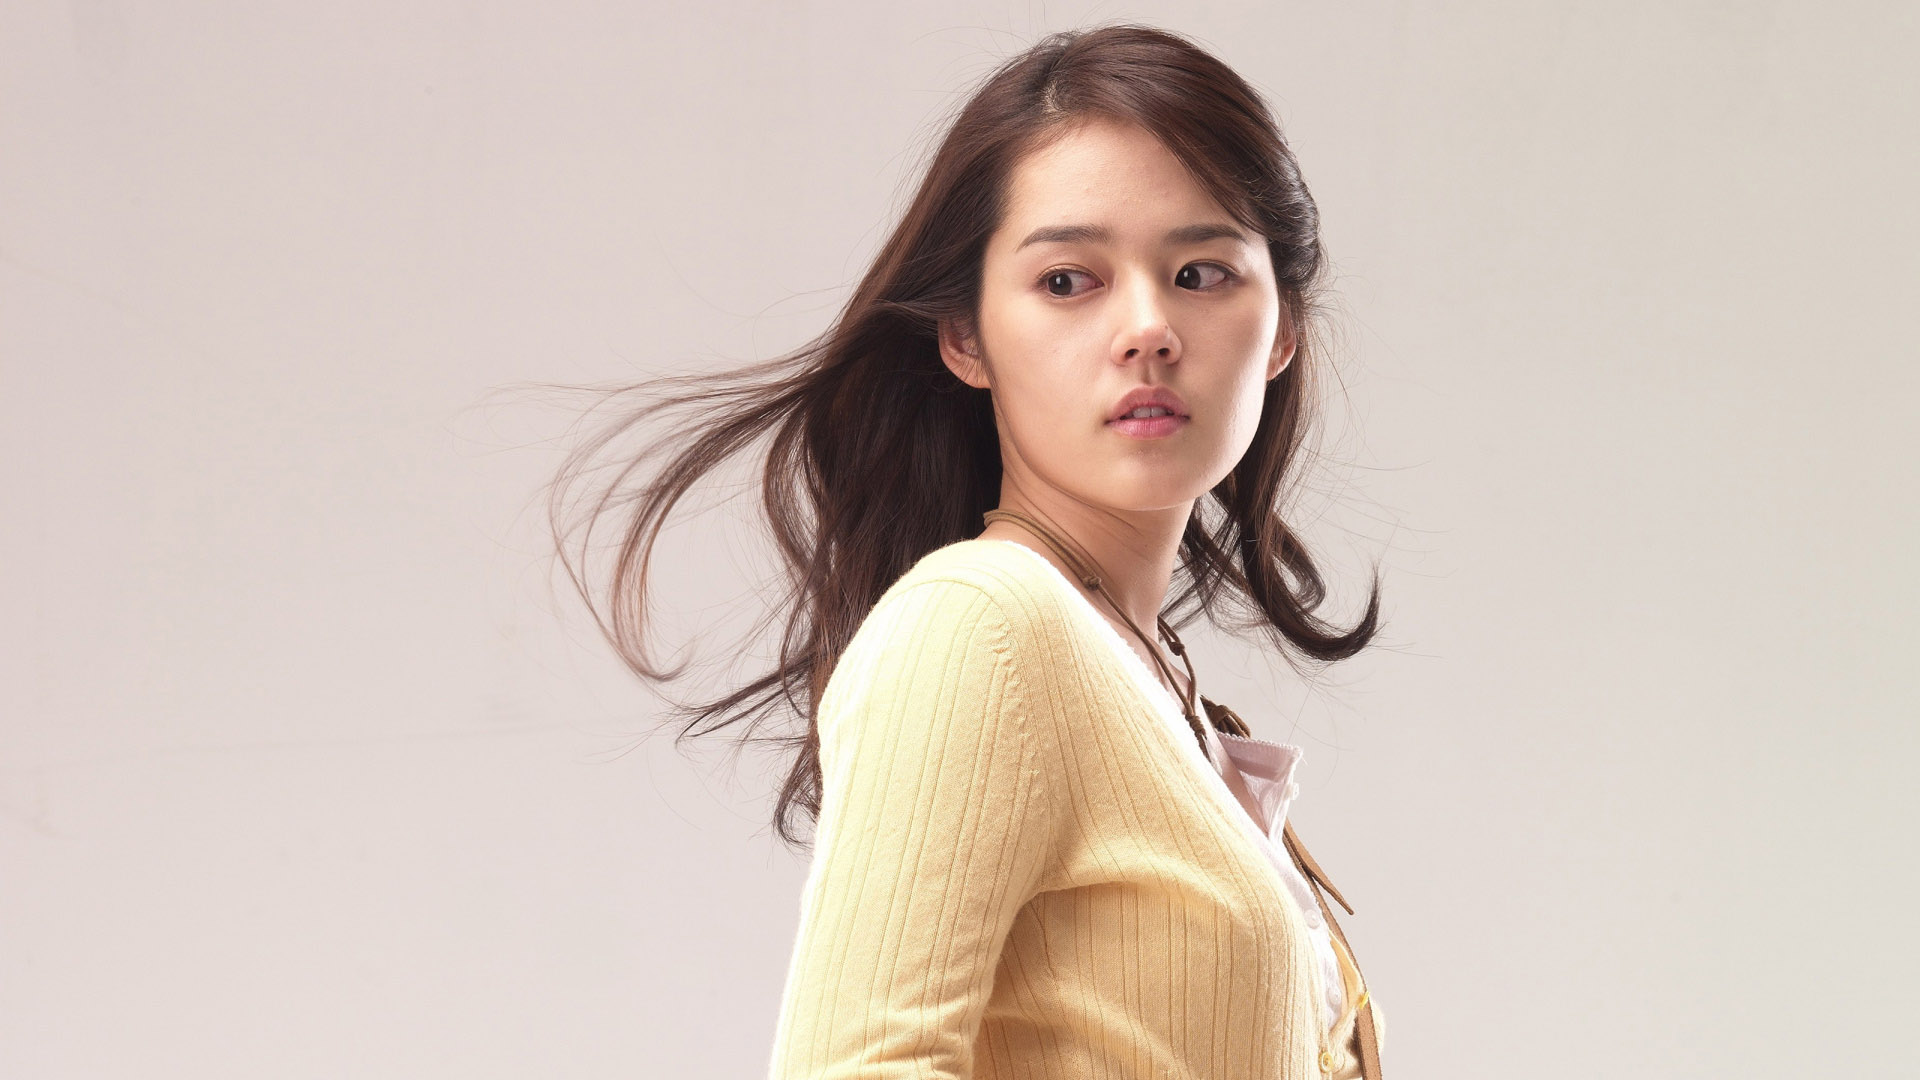 Korean Girl Model Wallpaper And Image